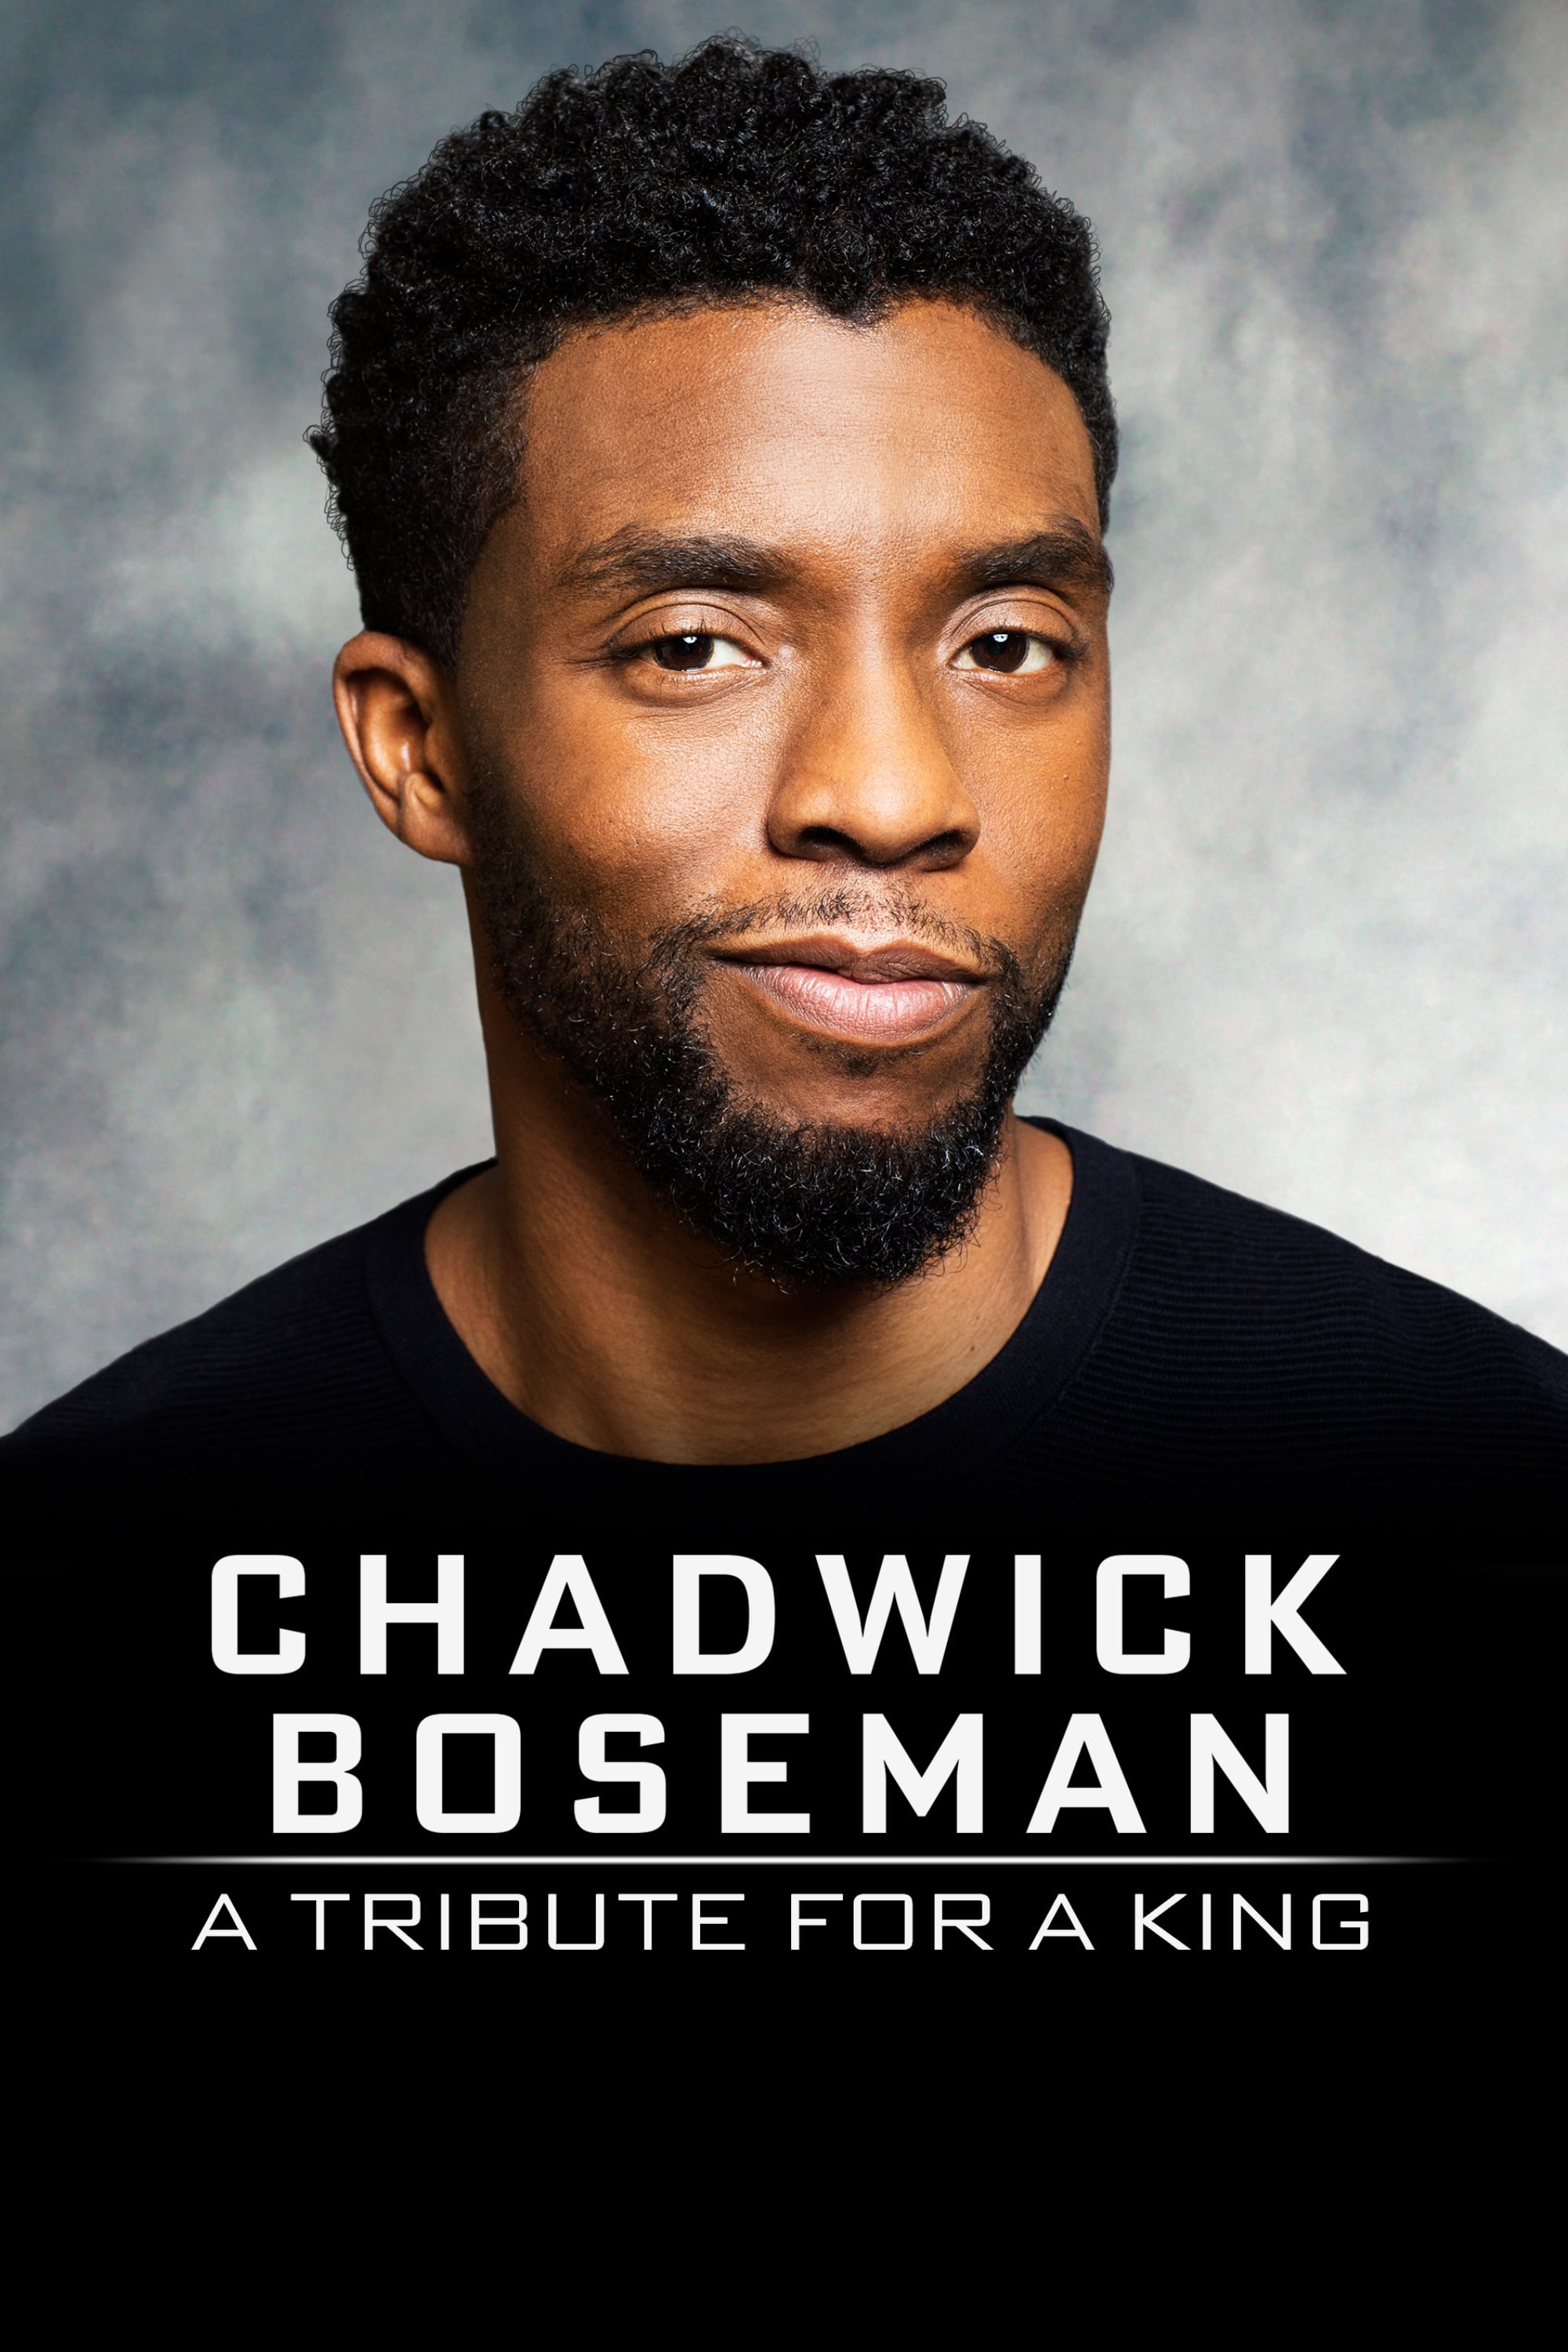 Chadwick Boseman: Homenagem a um Rei